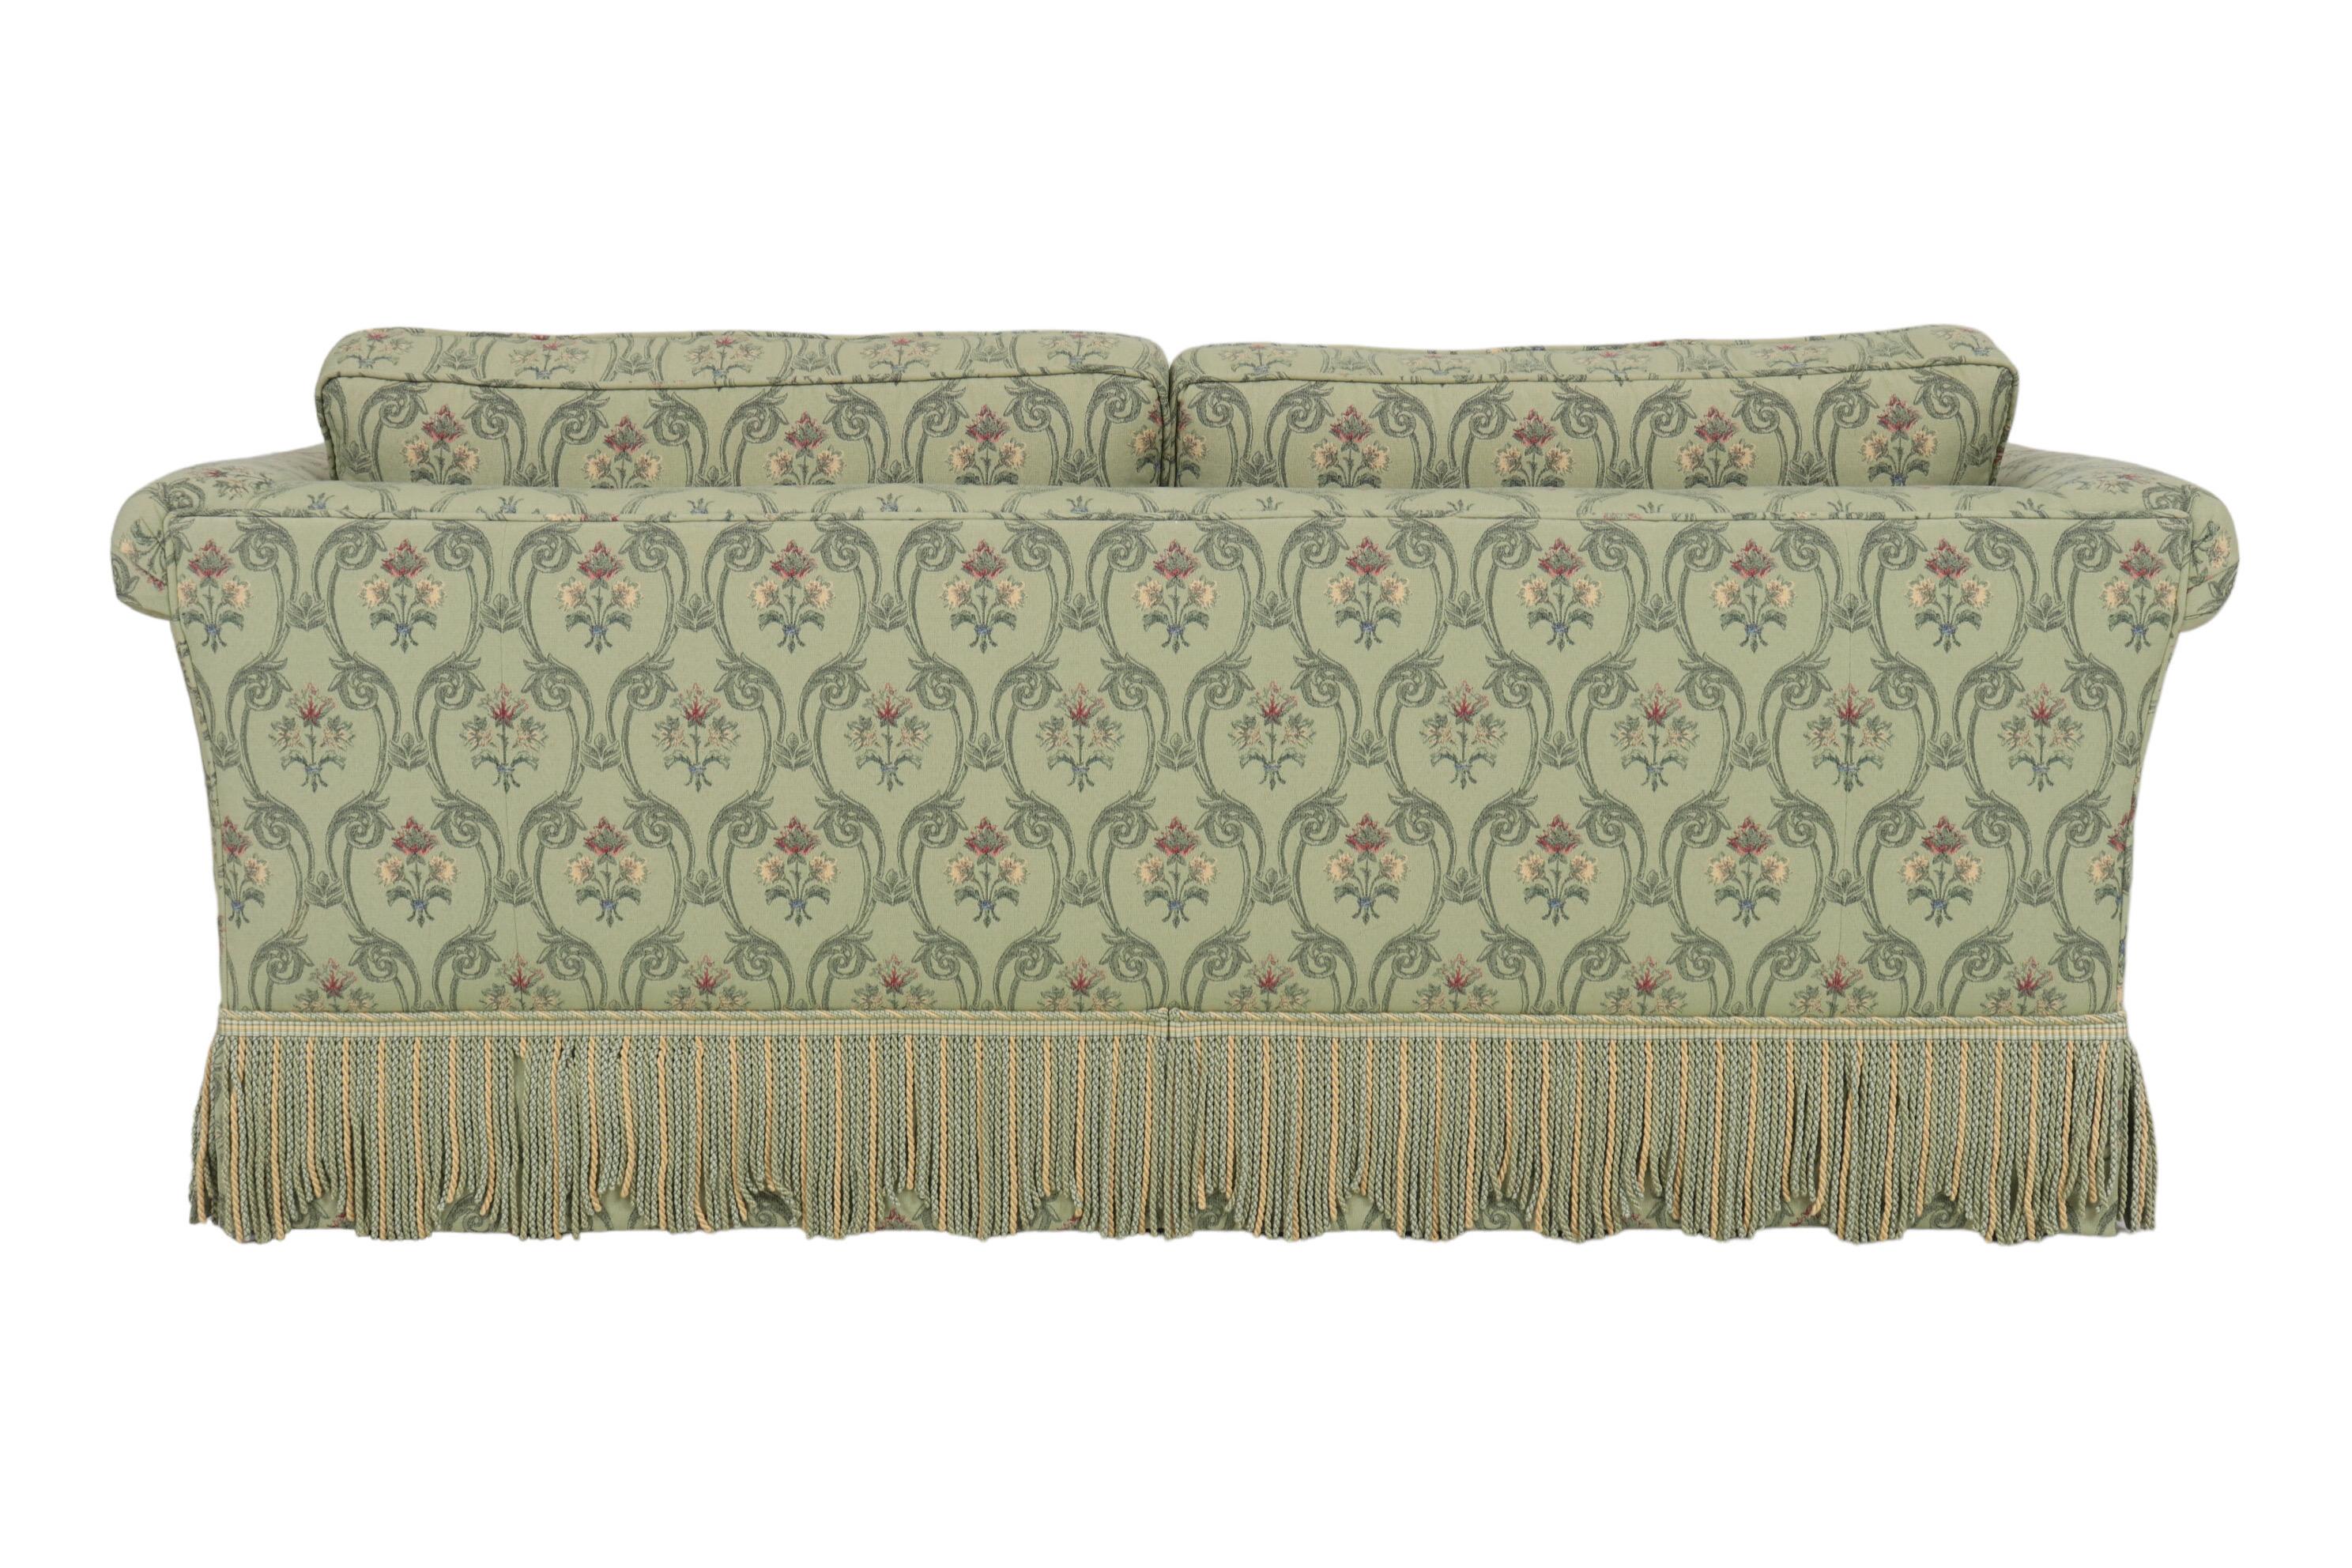 20th Century Chesterfield Sleeper Sofa in Green